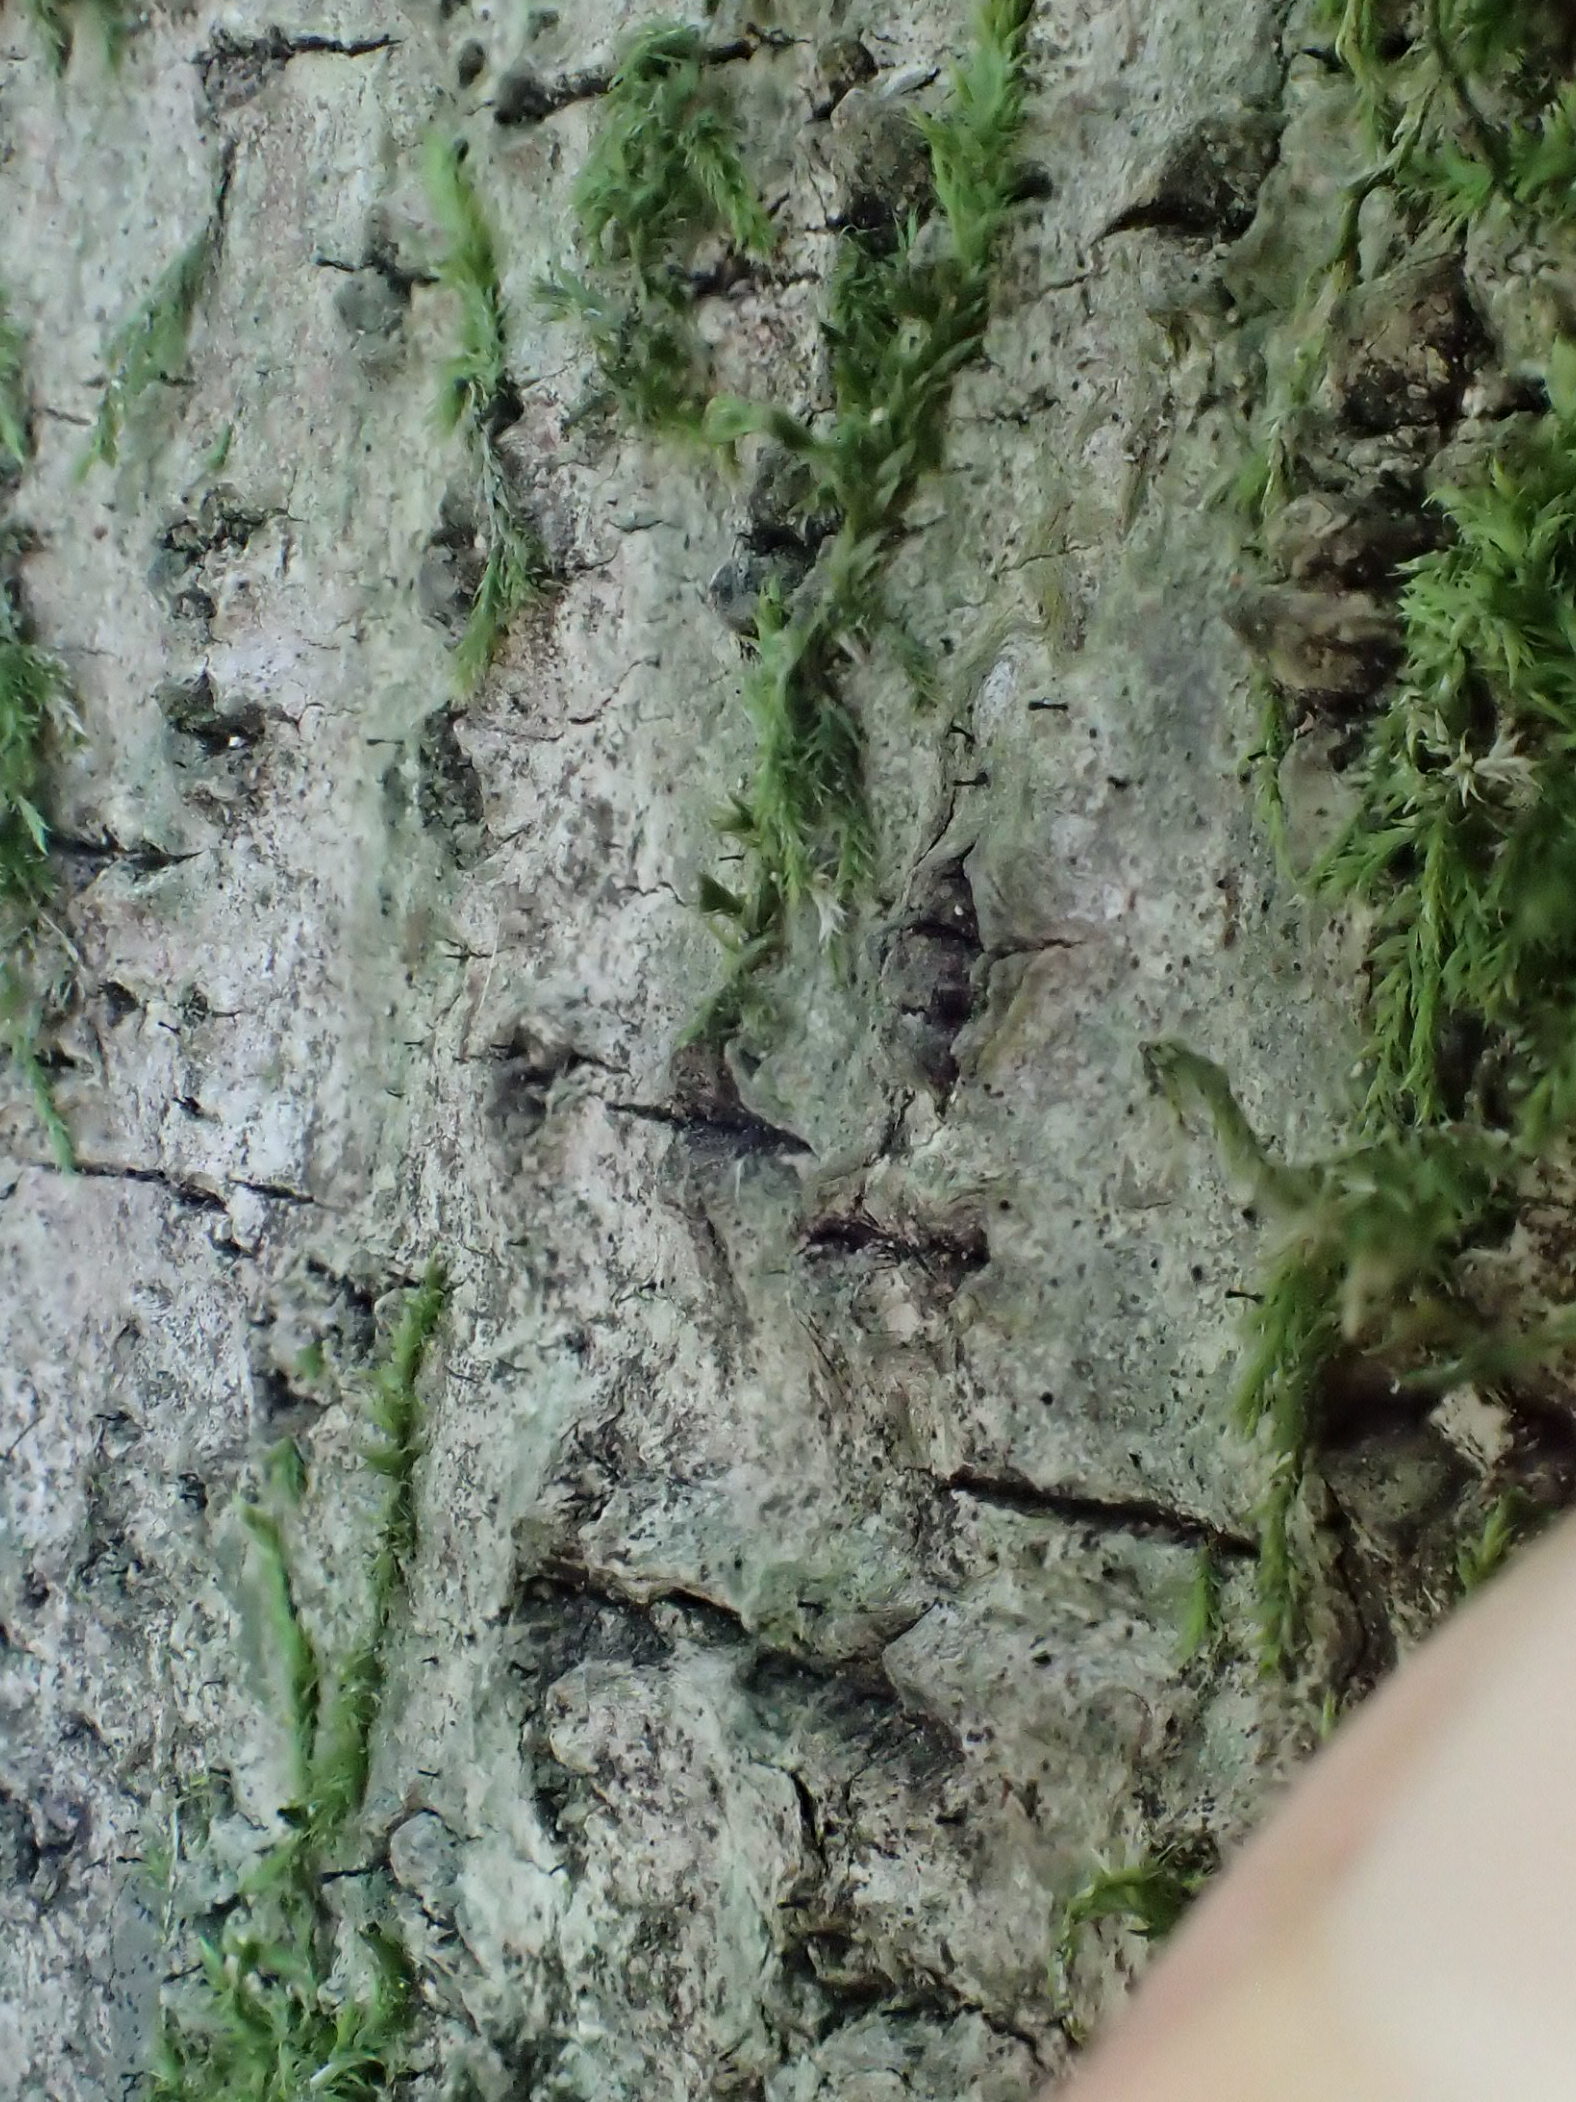 Stenocybe septata, black pinheads on pale grey thallus, on holly